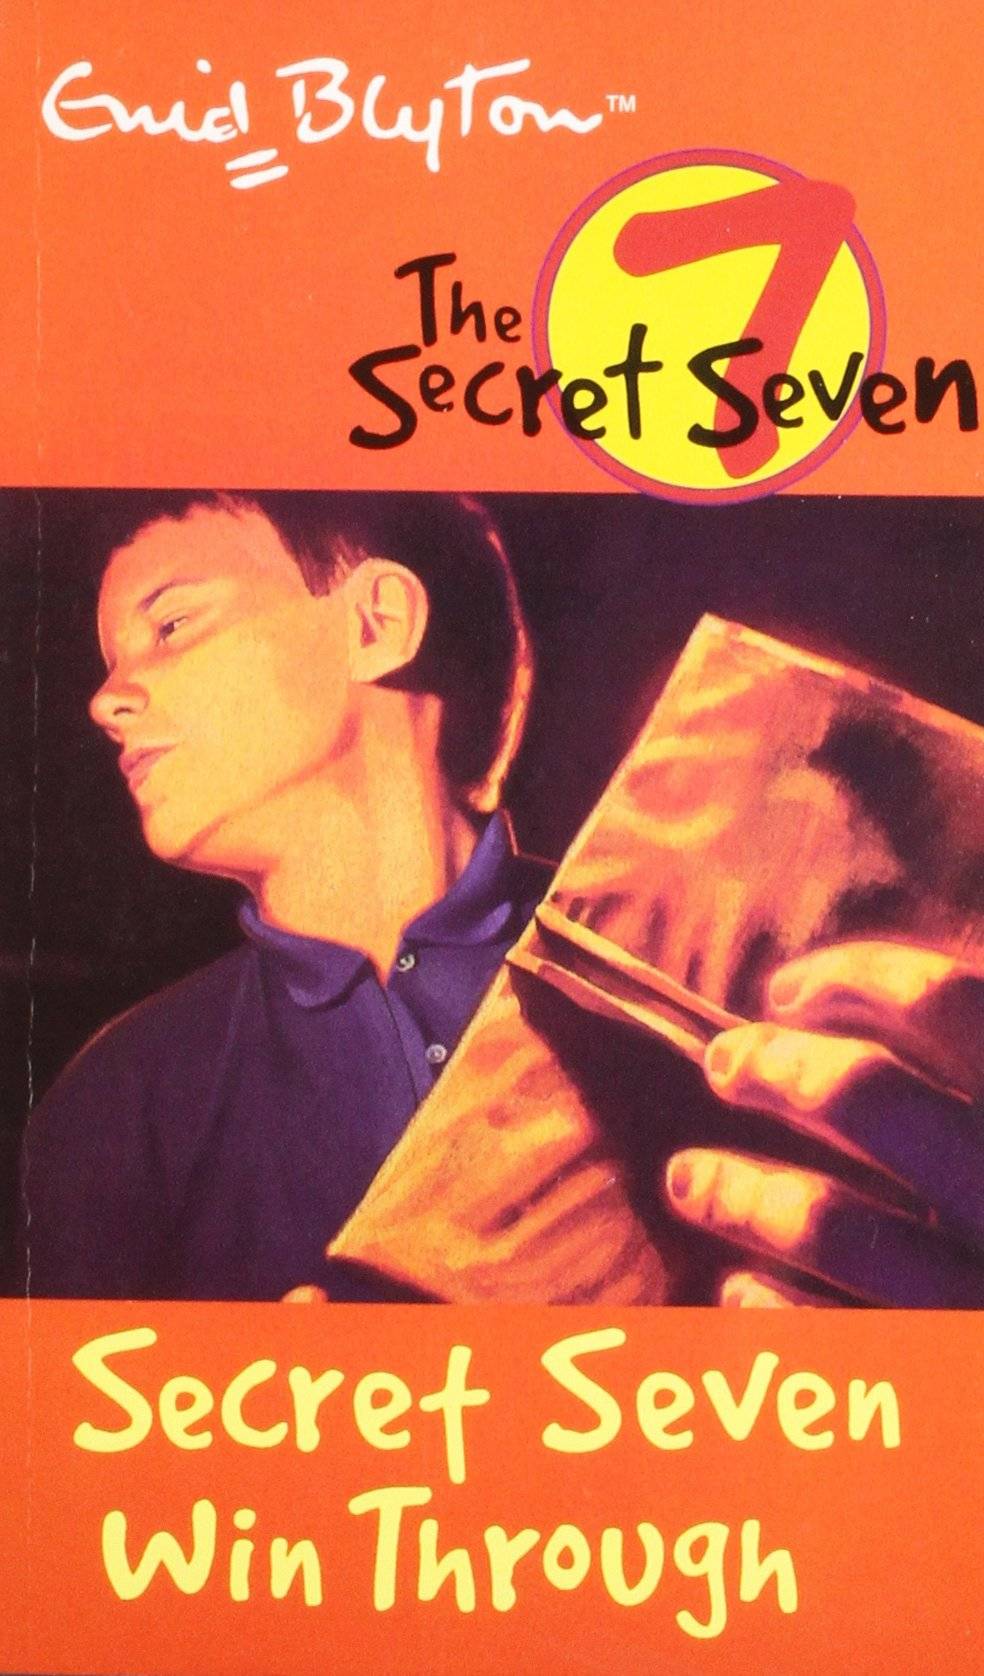 IMG : Secret seven win through